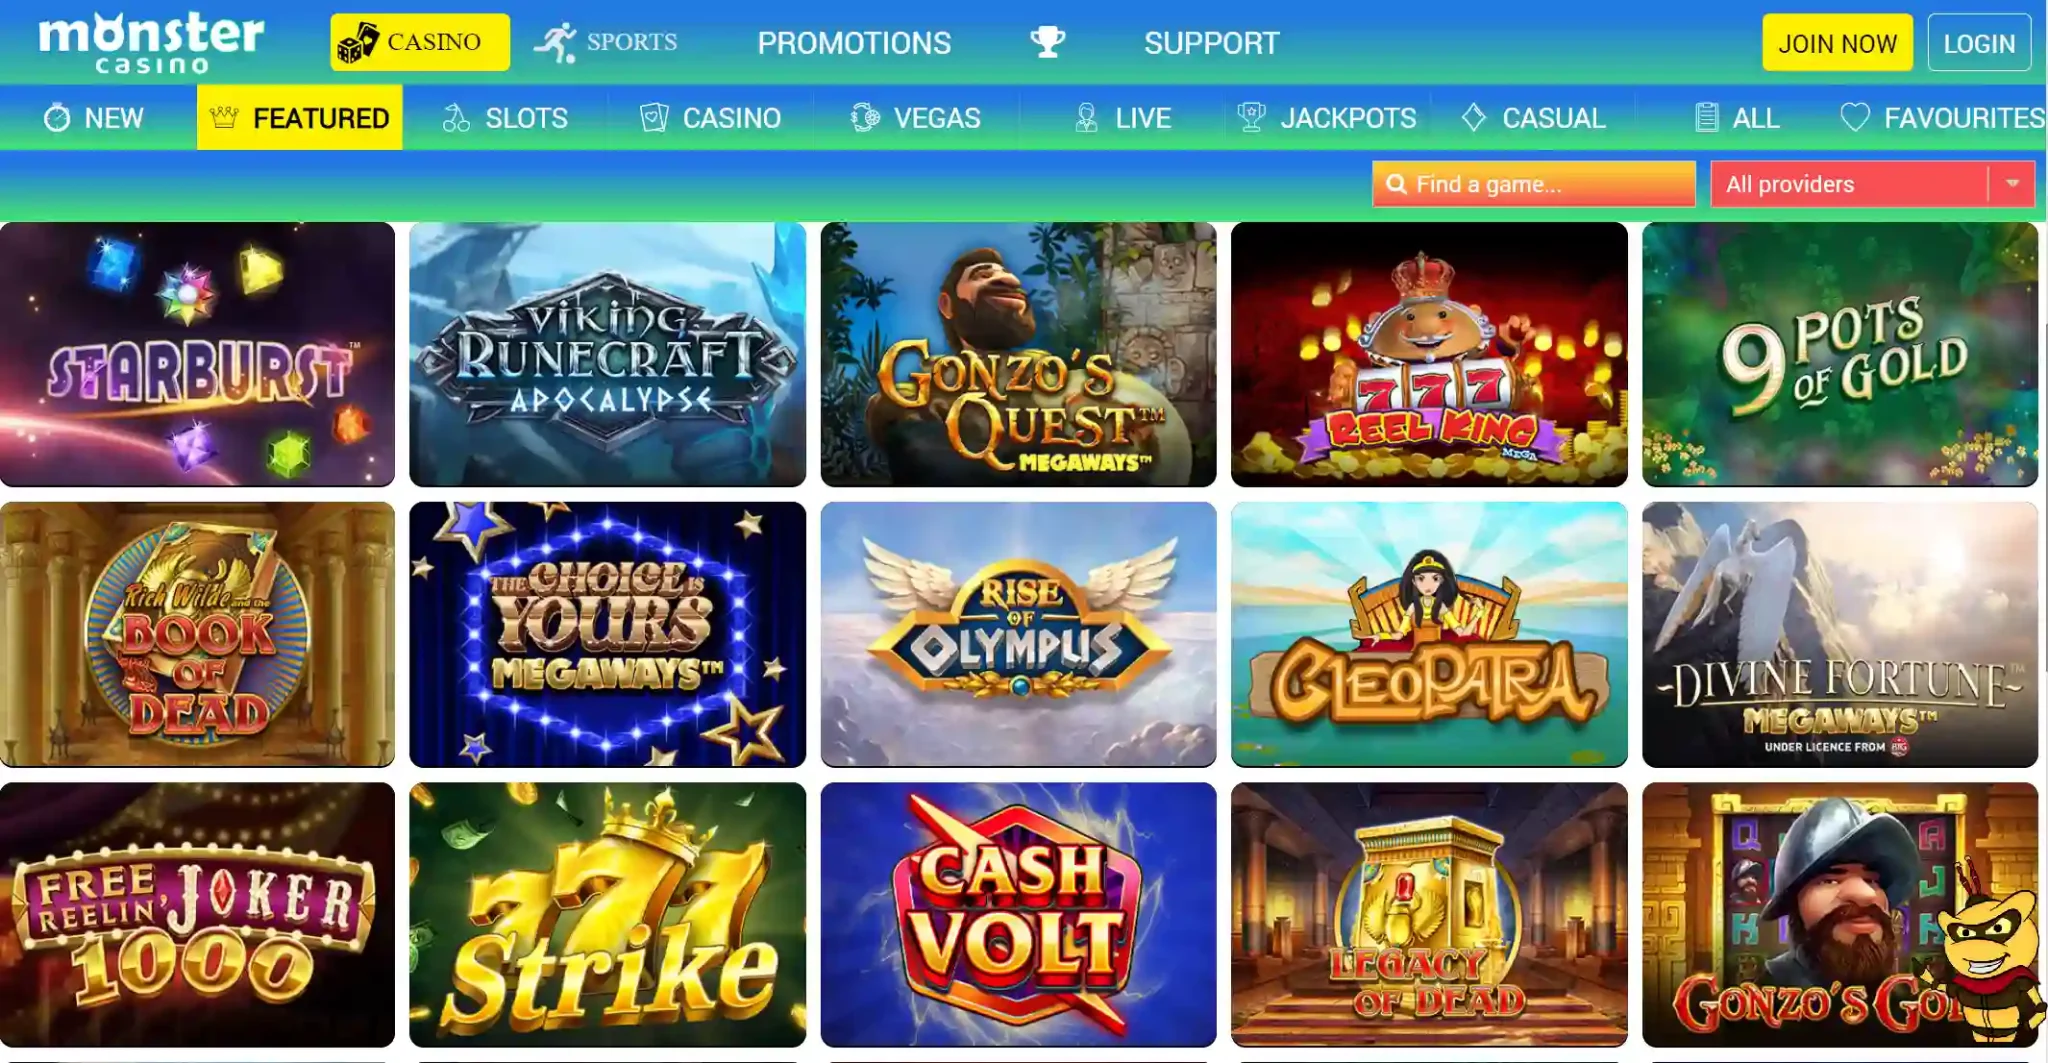 Endless Gaming Options at Monster Casino